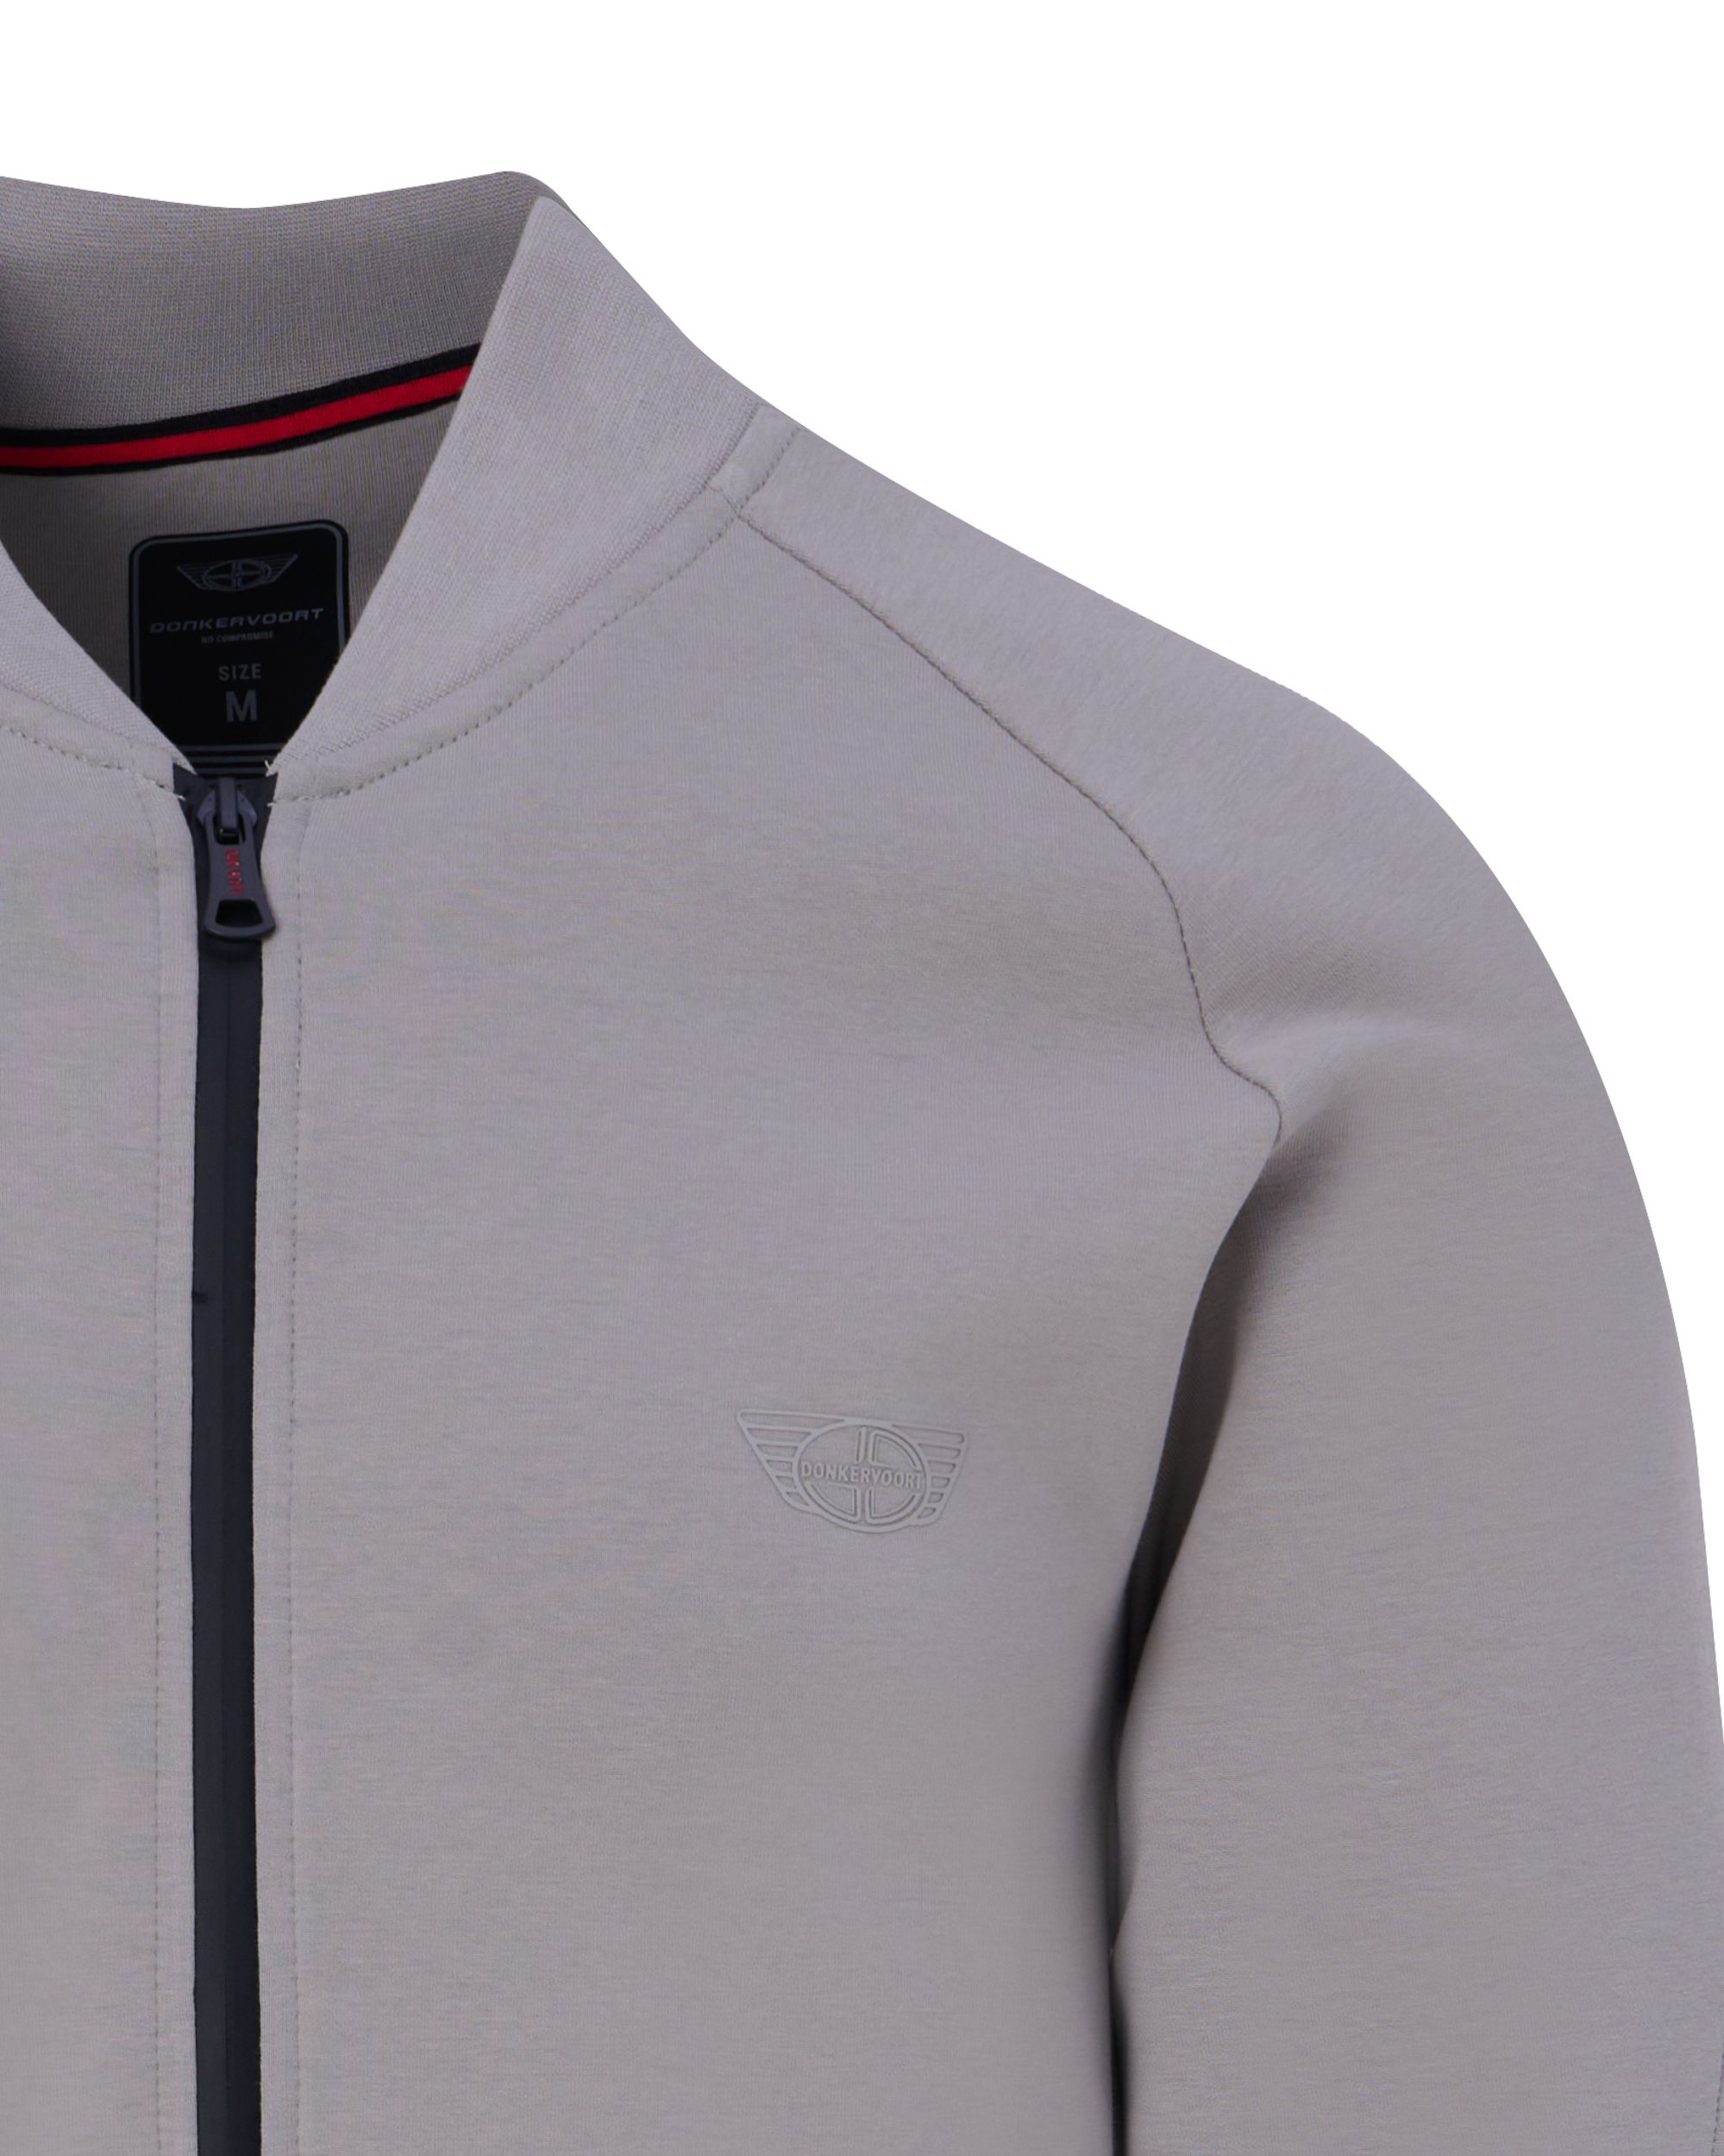 Donkervoort-full zip sweatshirt Flint Gray 092467-002-L